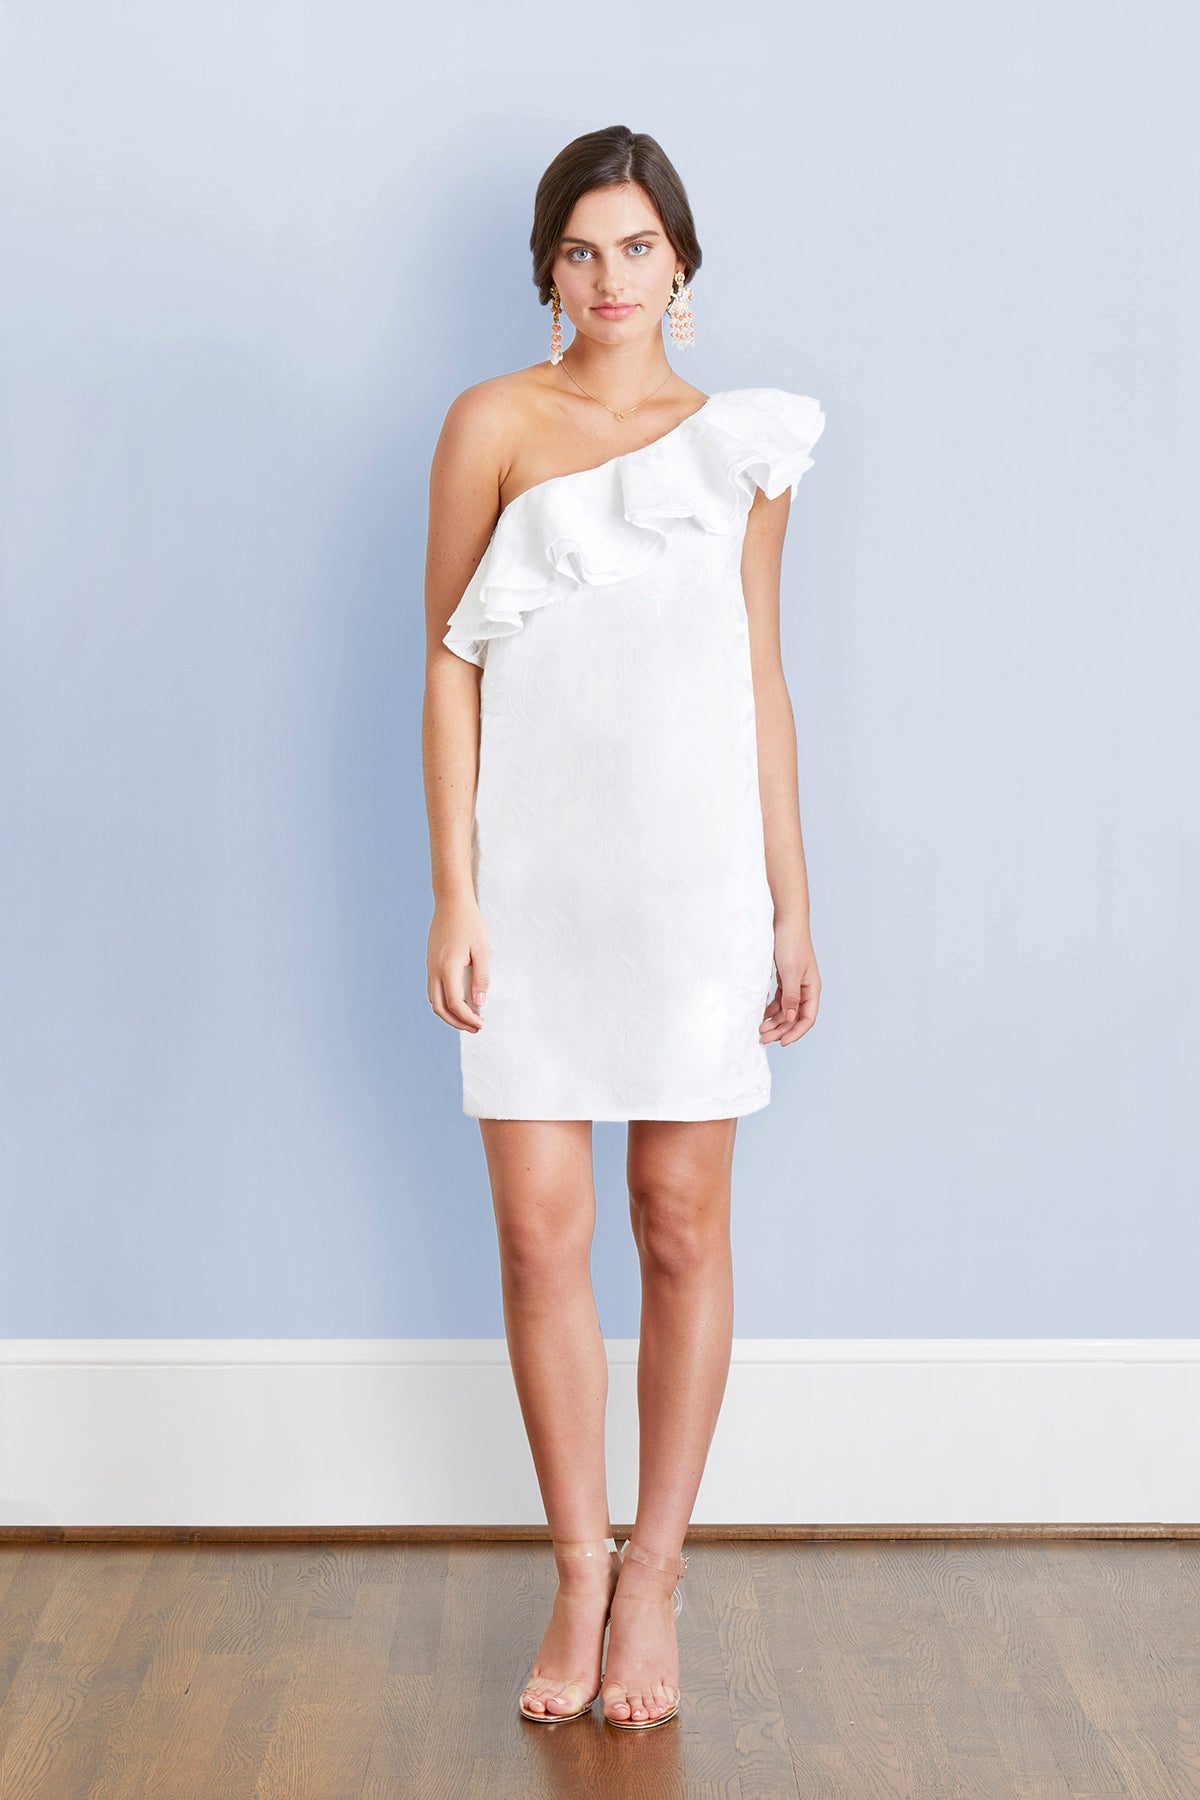 white dress for bride at bridal shower